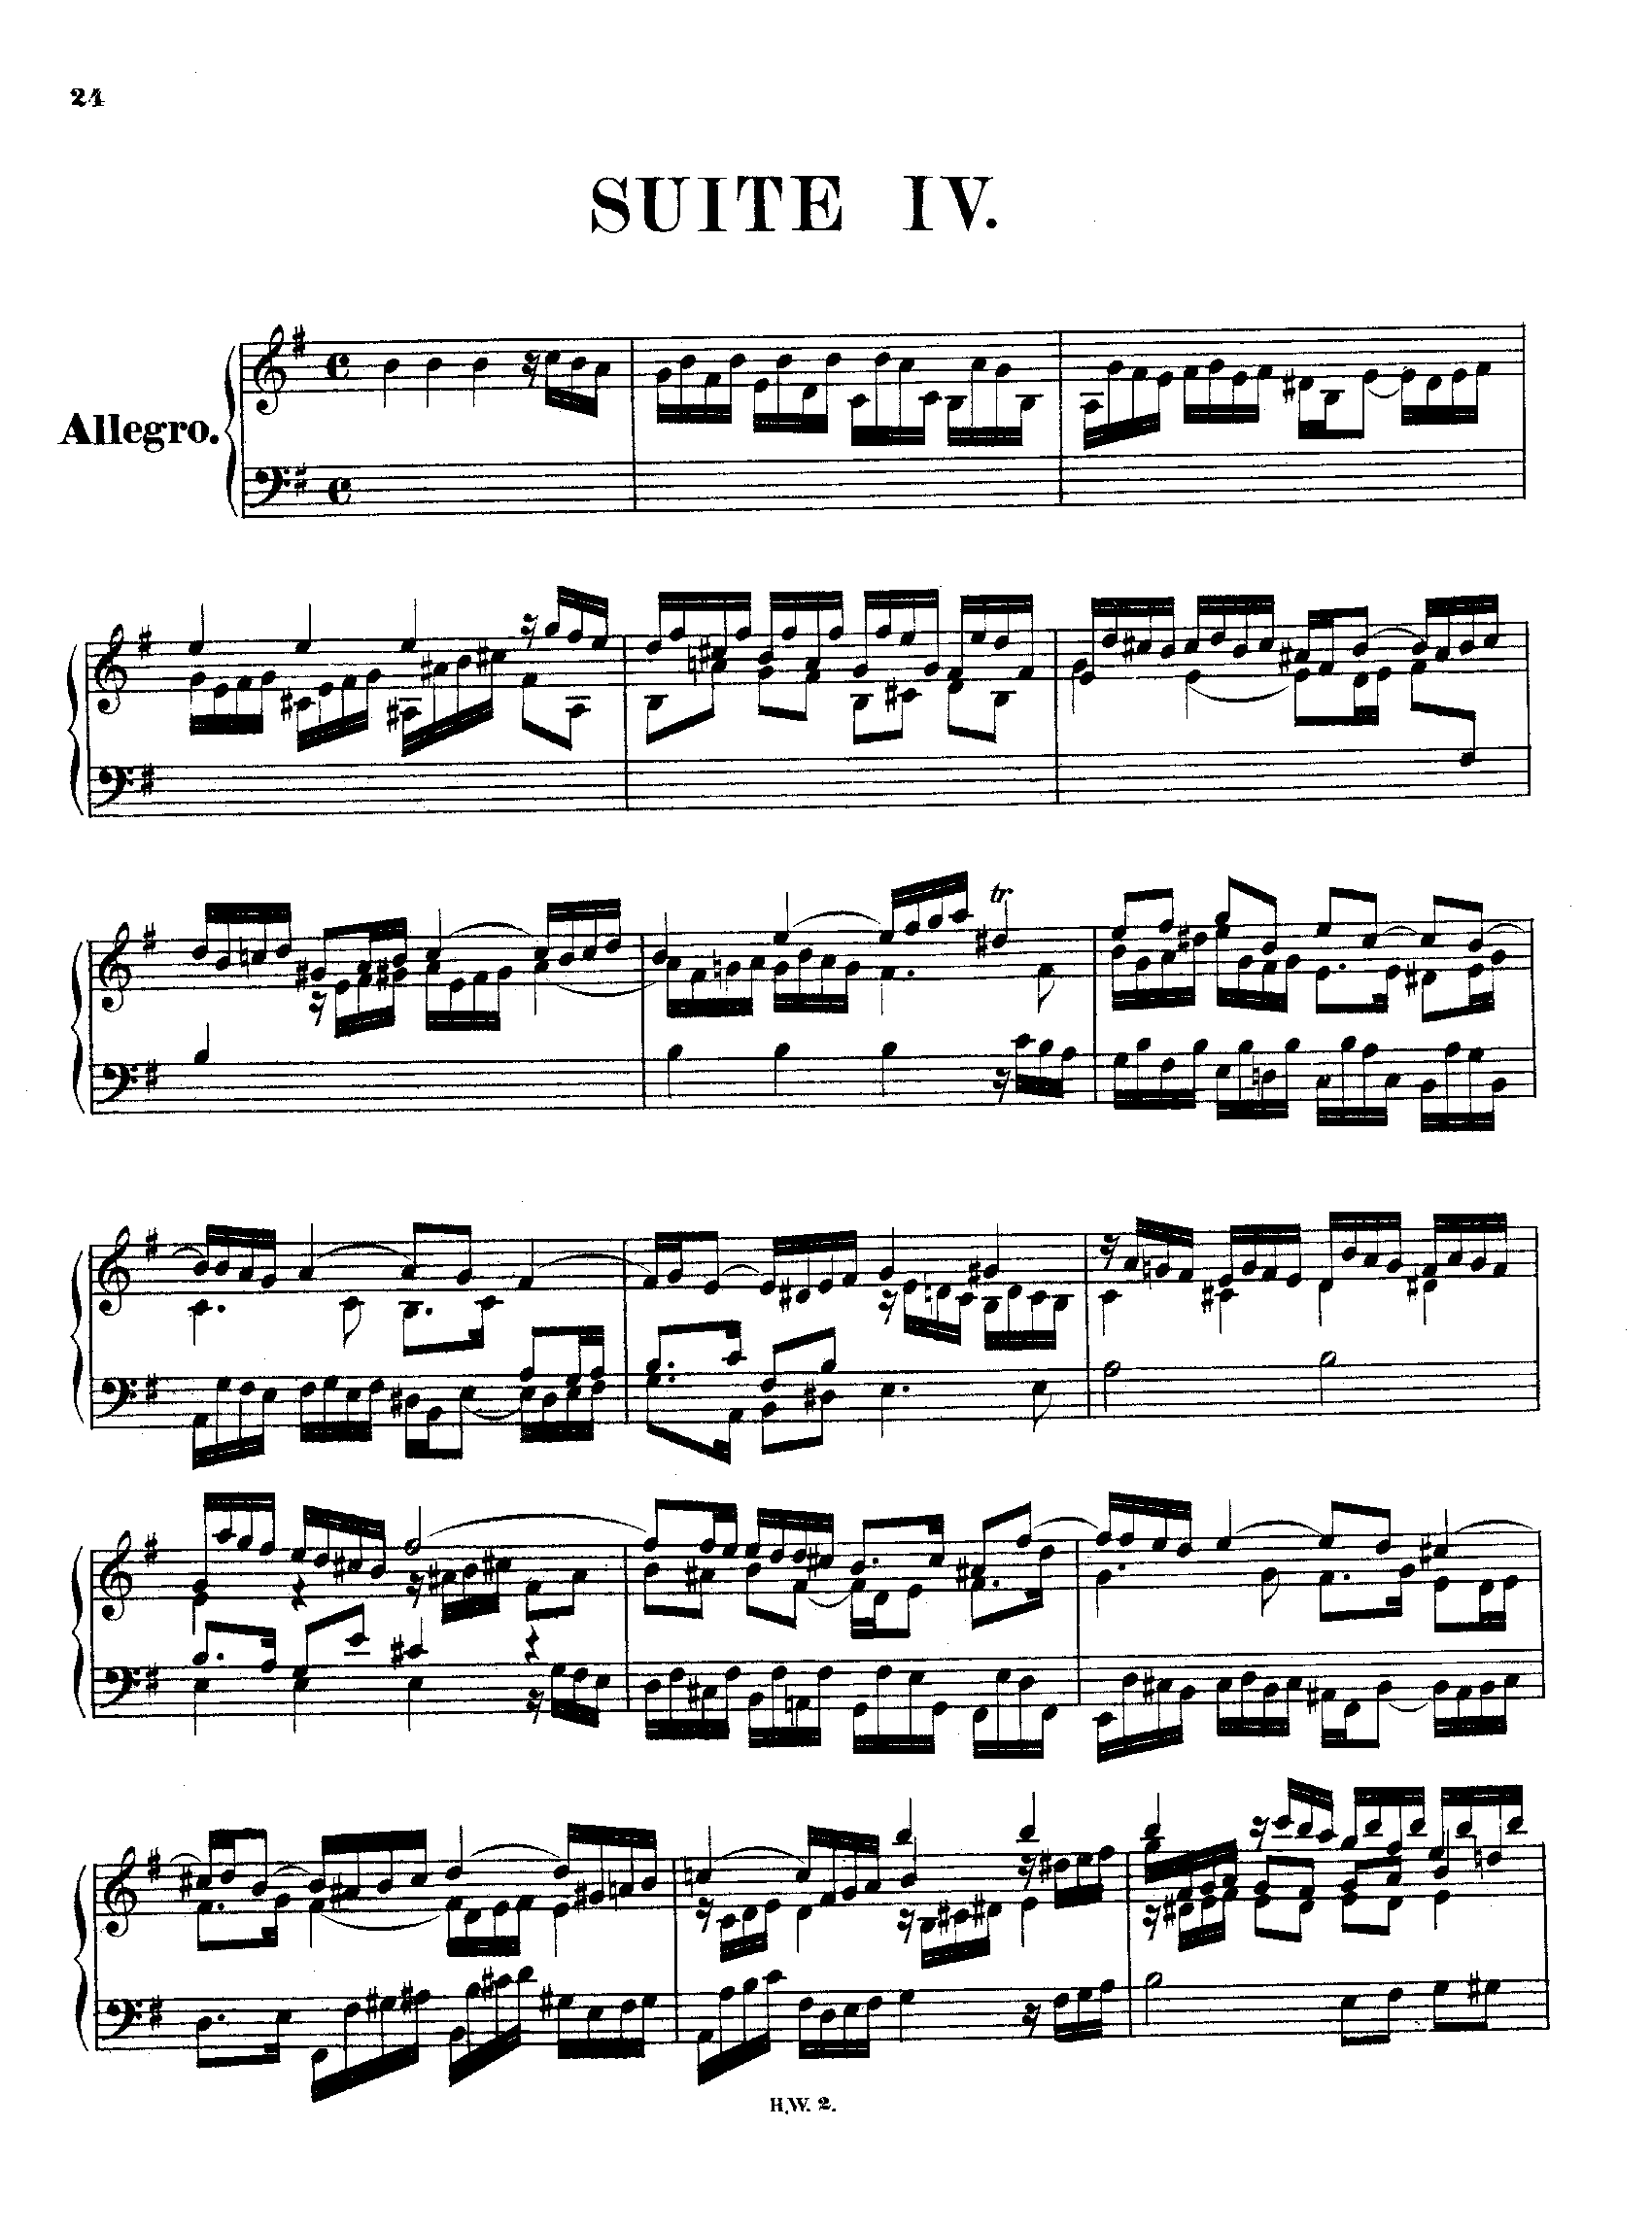 Handel, George Frideric - Suite in E minor, HWV 429 Sheet music for ...